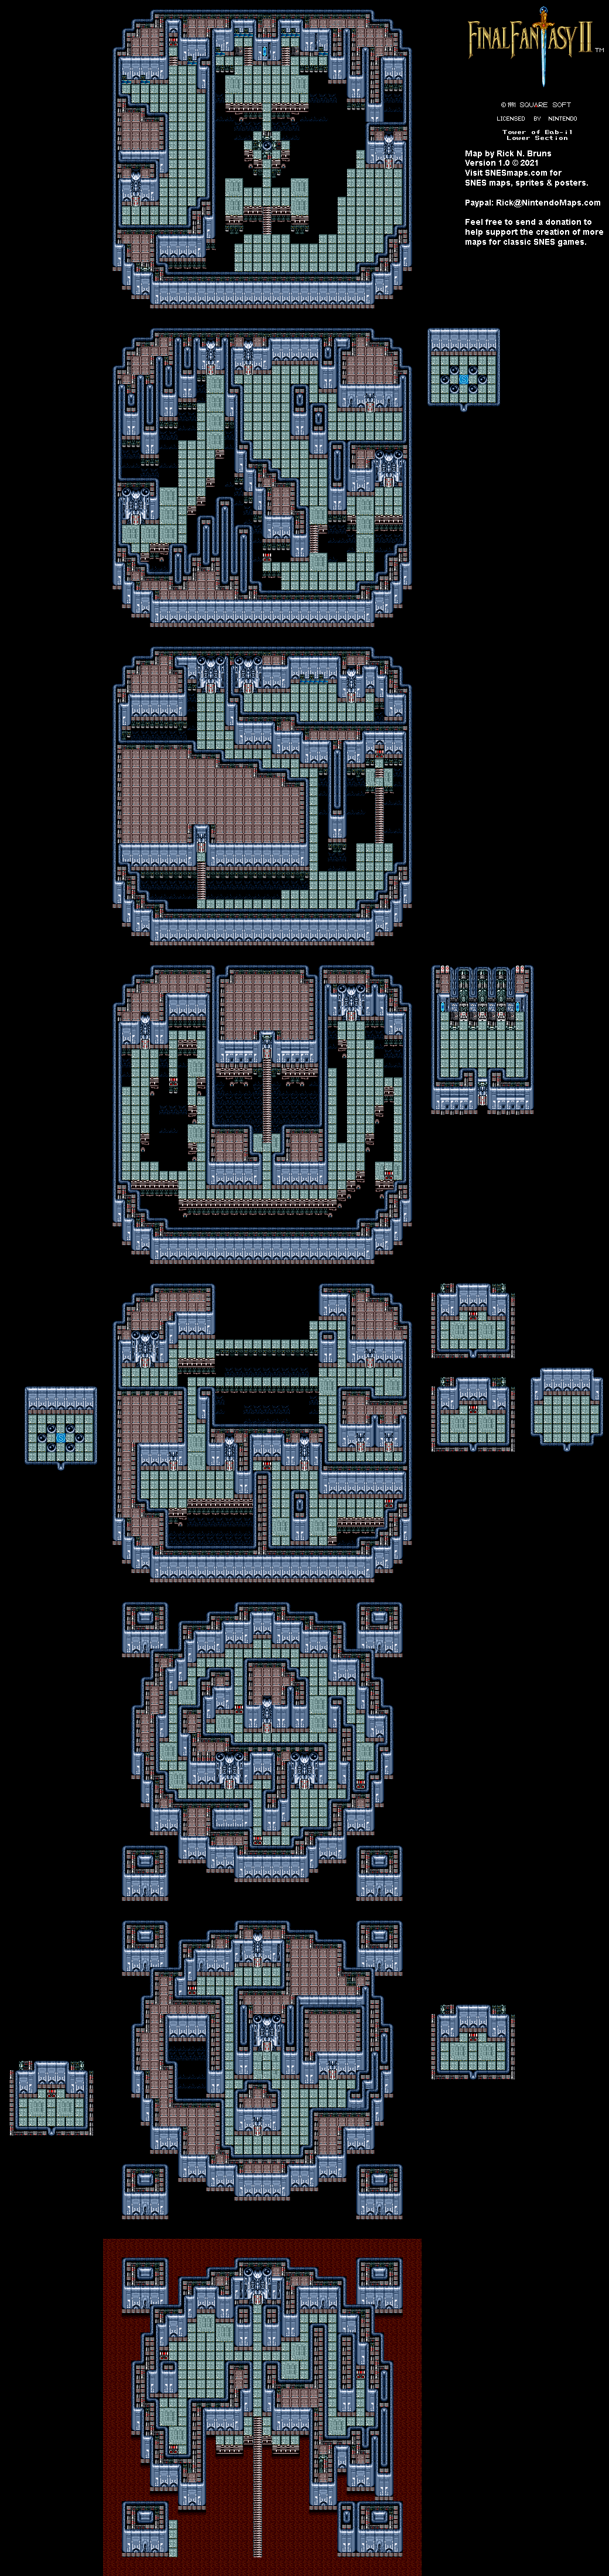 Final Fantasy II 2 (IV 4) - TowerOfBab-il Lower Section Super Nintendo SNES Map BG